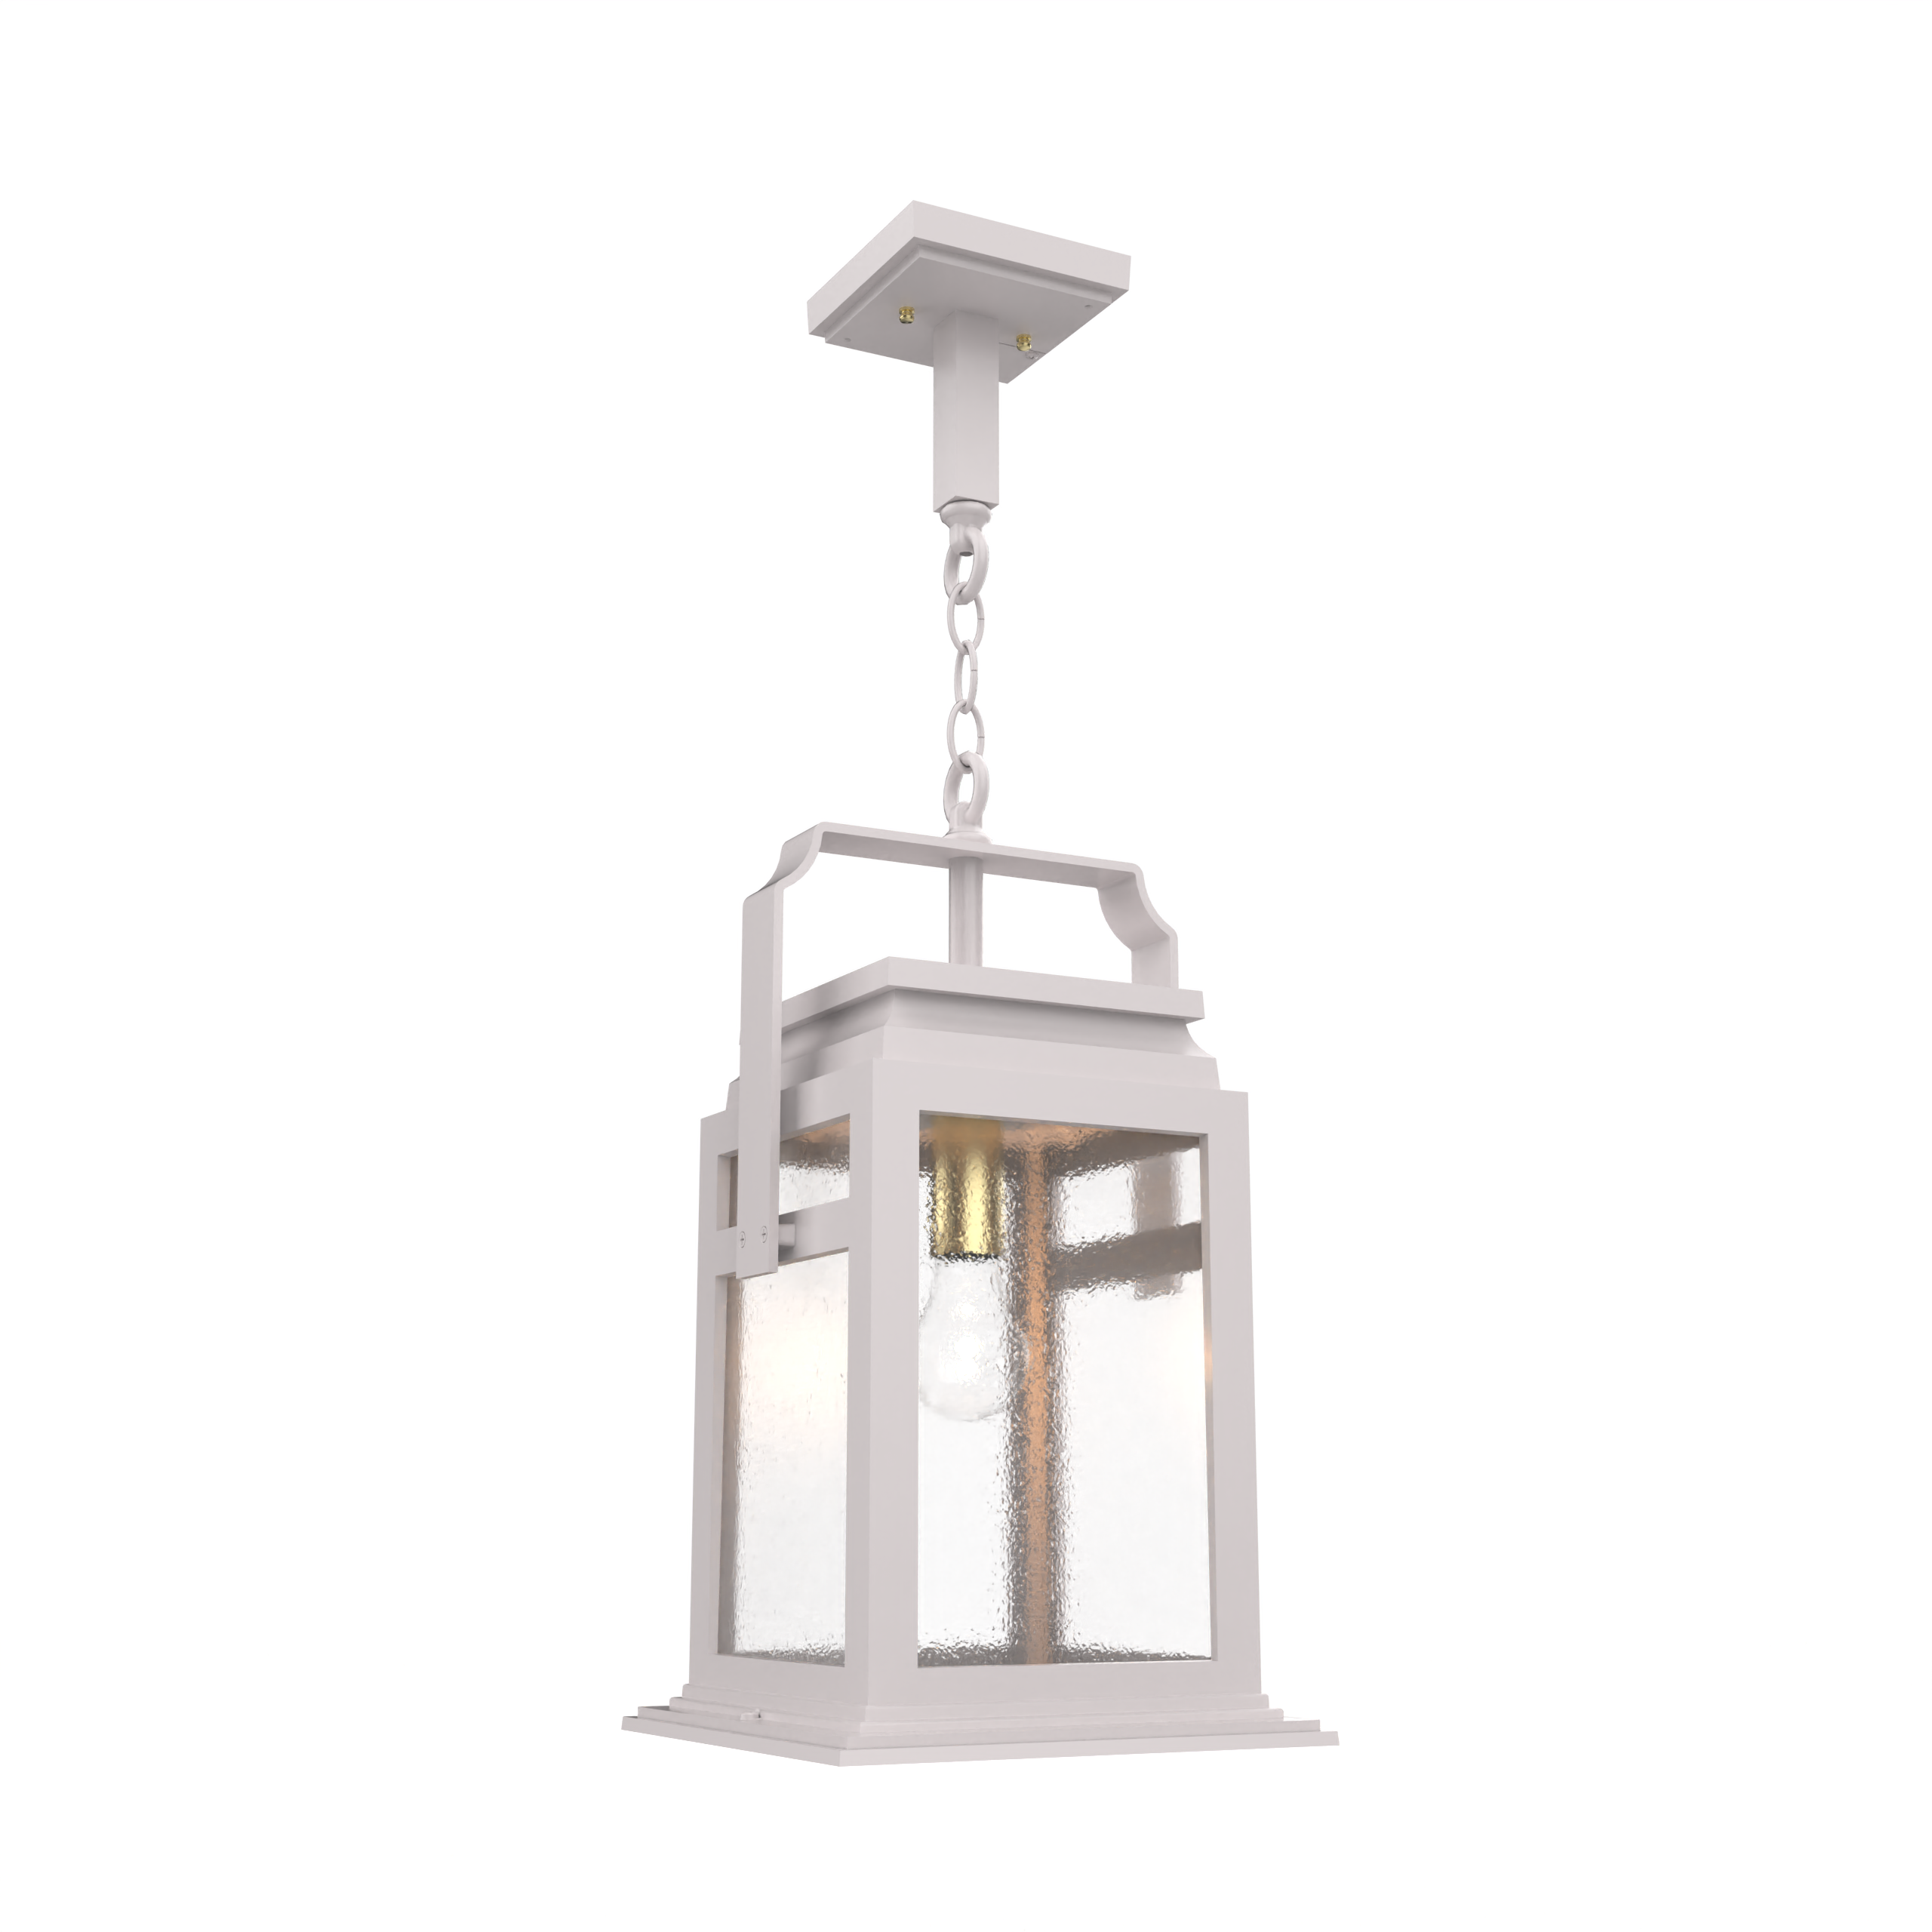 Serie 65e - Ceiling mount on chain medium format - 26550